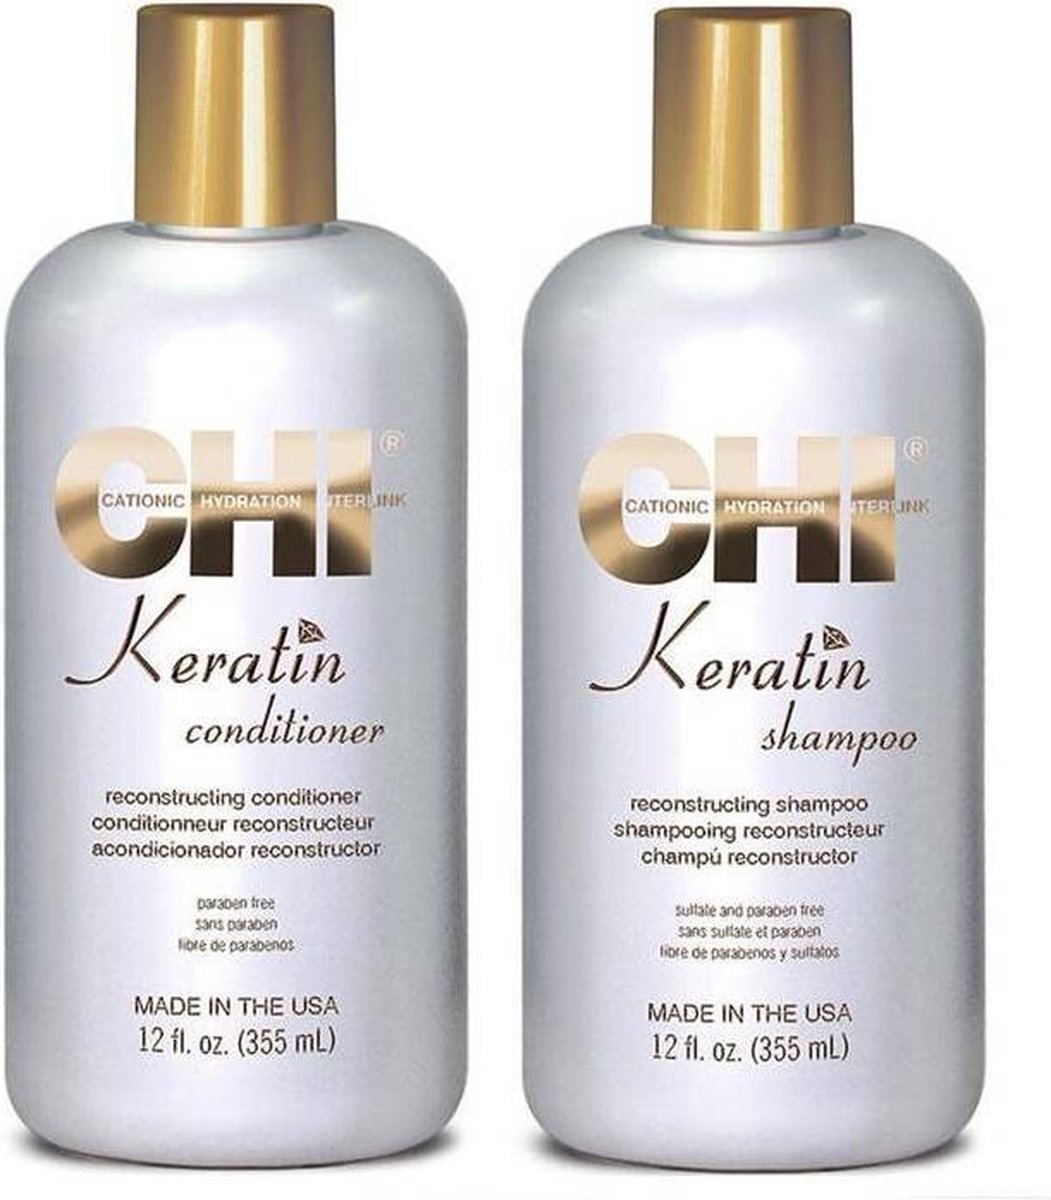 CHI Keratin Shampoo & Conditioner